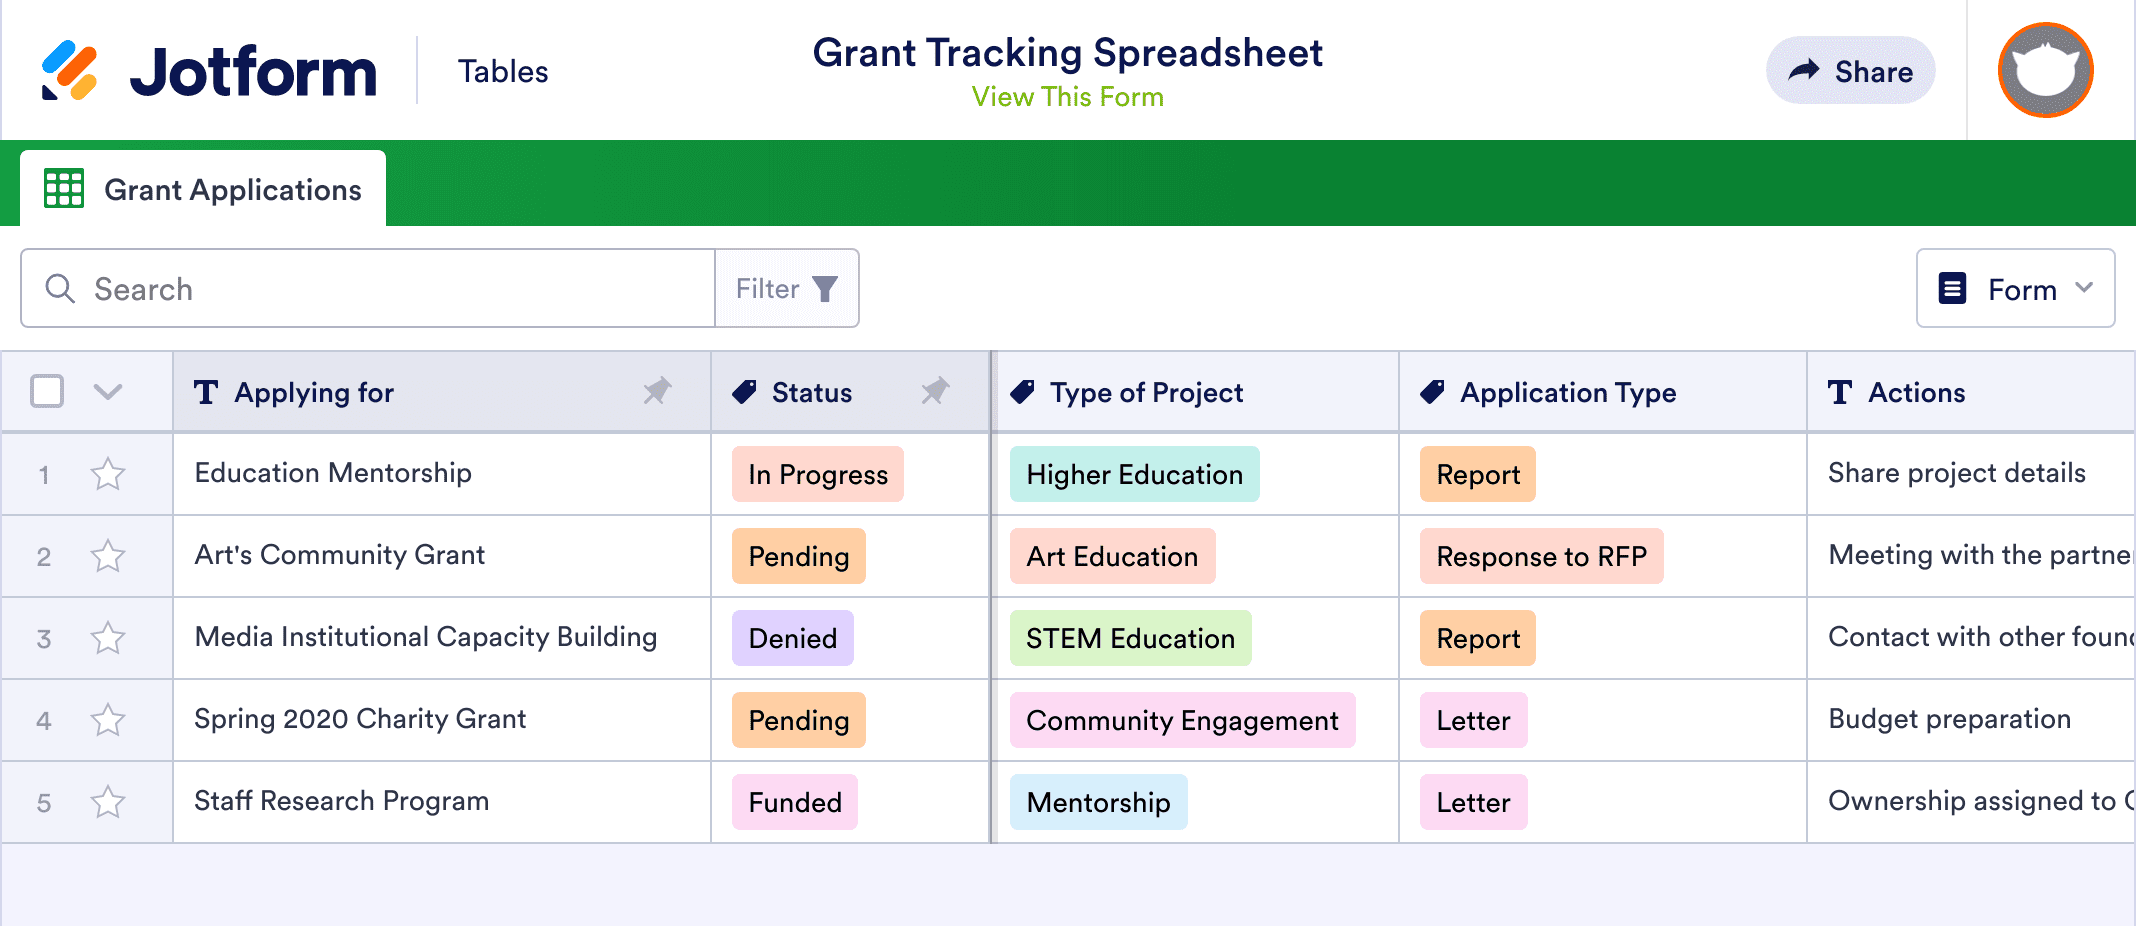 Grant Tracking Spreadsheet